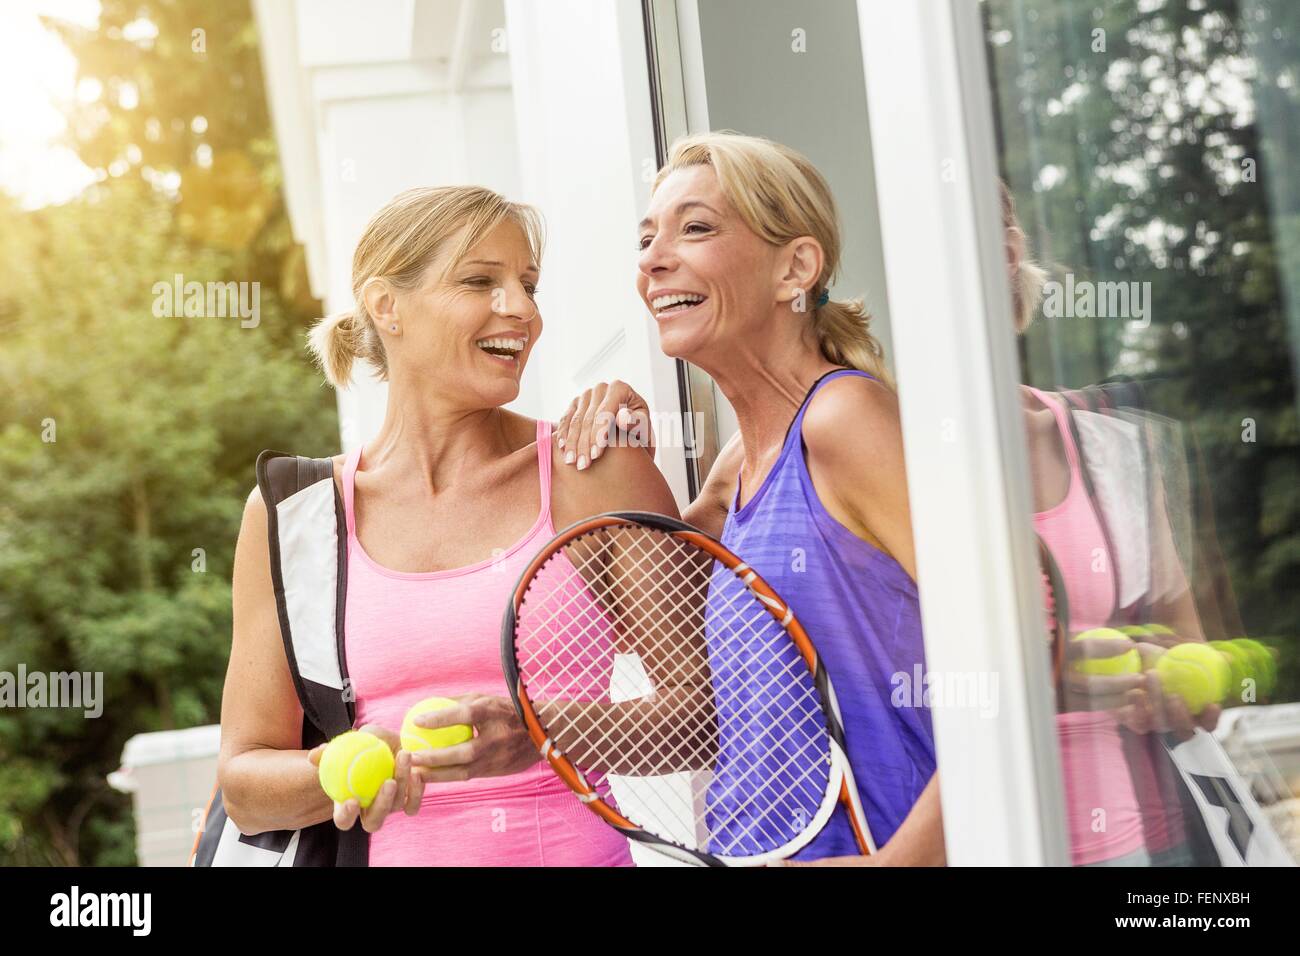 Two mature women preparing to play tennis at patio door Stock Photo